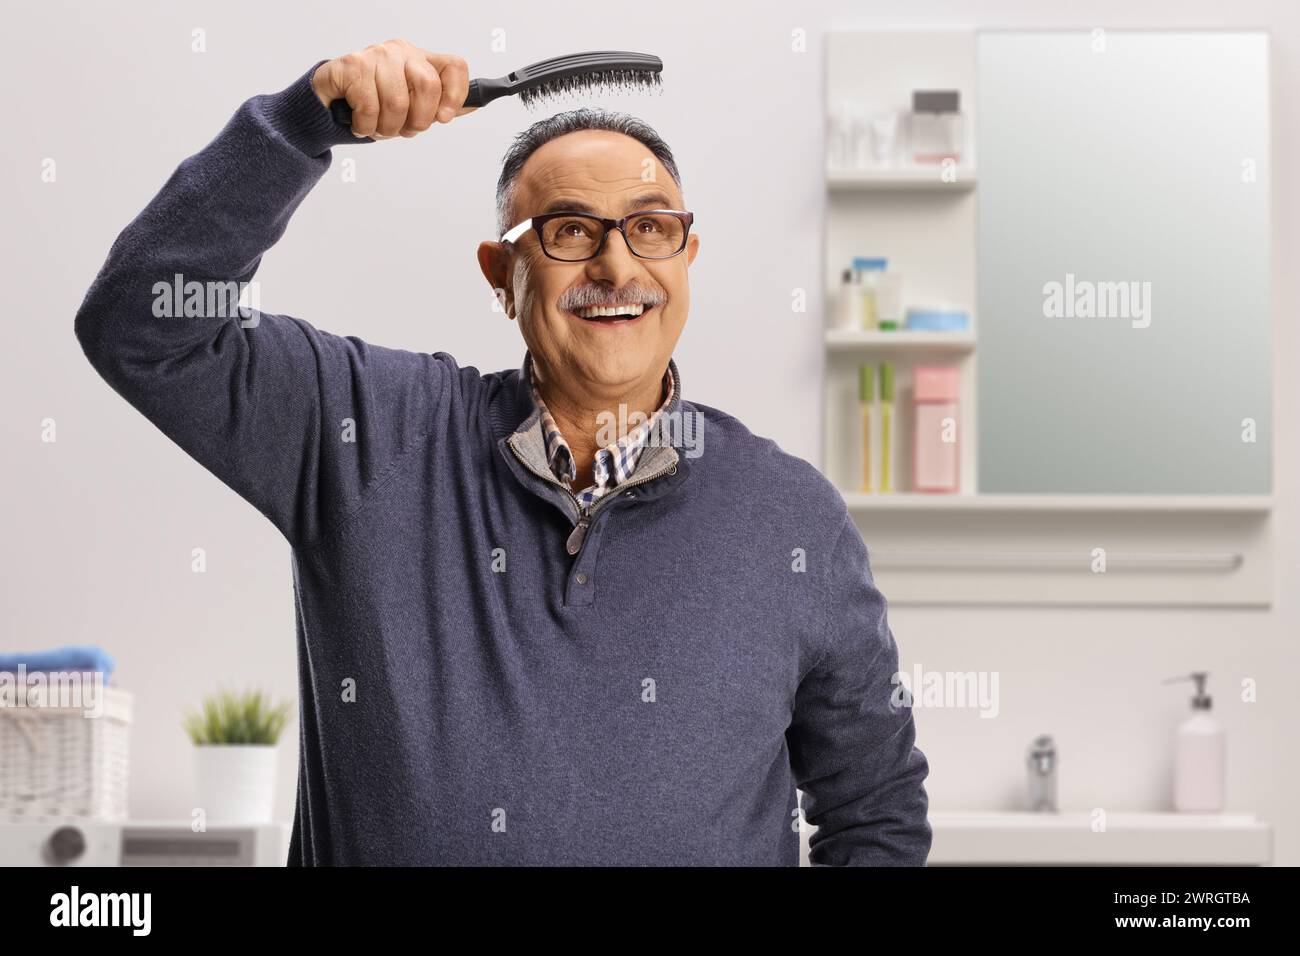 Mature man holding a hair brush in a bathroom Stock Photo